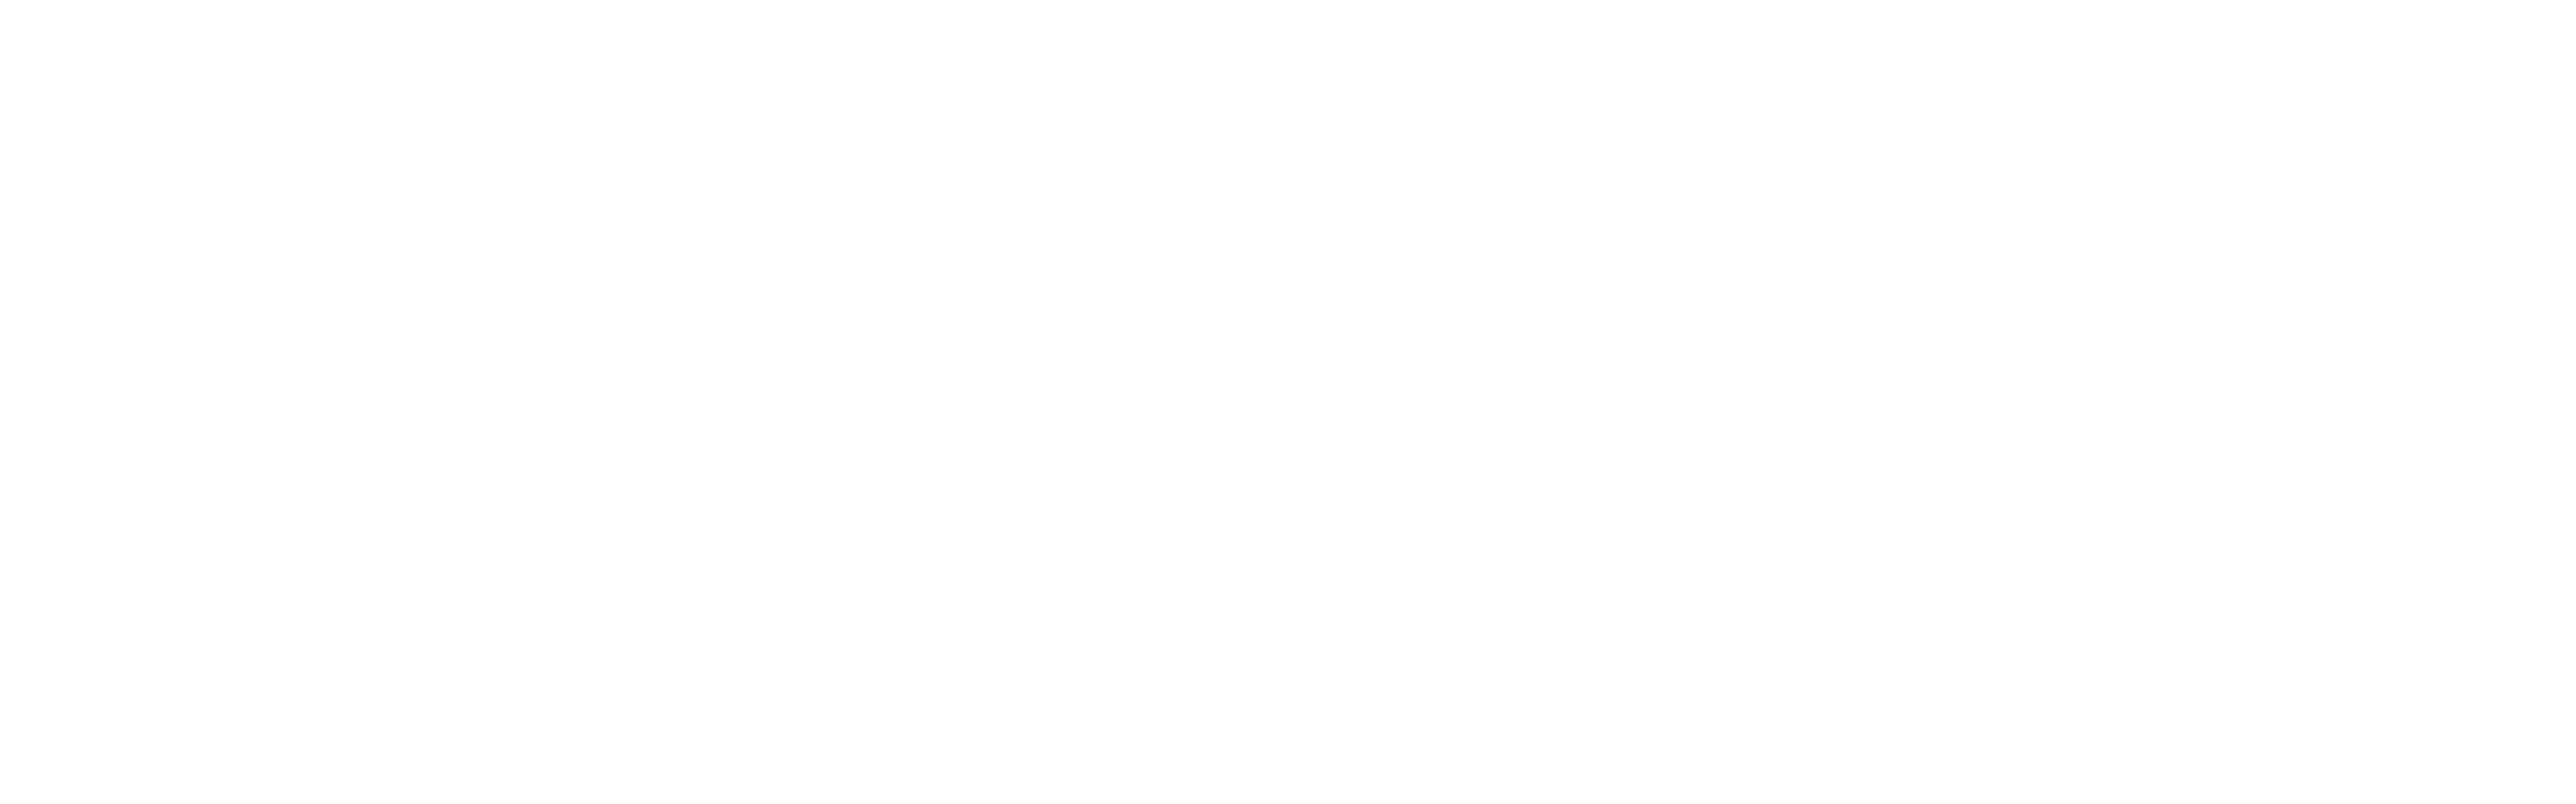 Crushers Logo - crag crushers